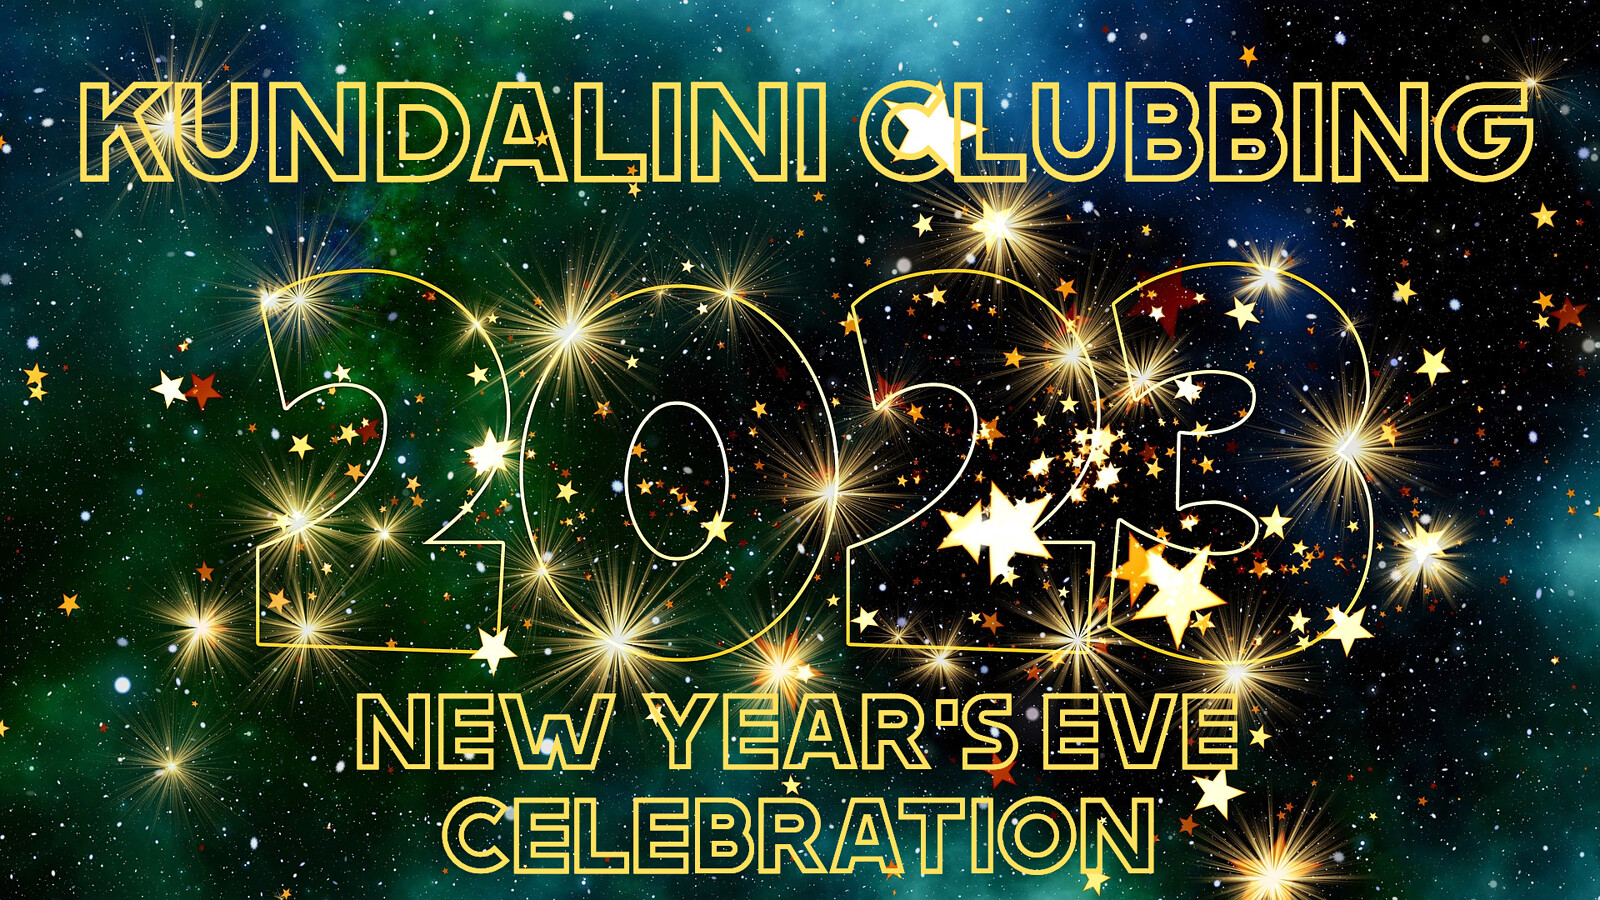 Kundalini Clubbing's Epic New Year Eve Celebration at Unitarian Meeting Hall, Brunswick Square, Bristol BS2 8PE